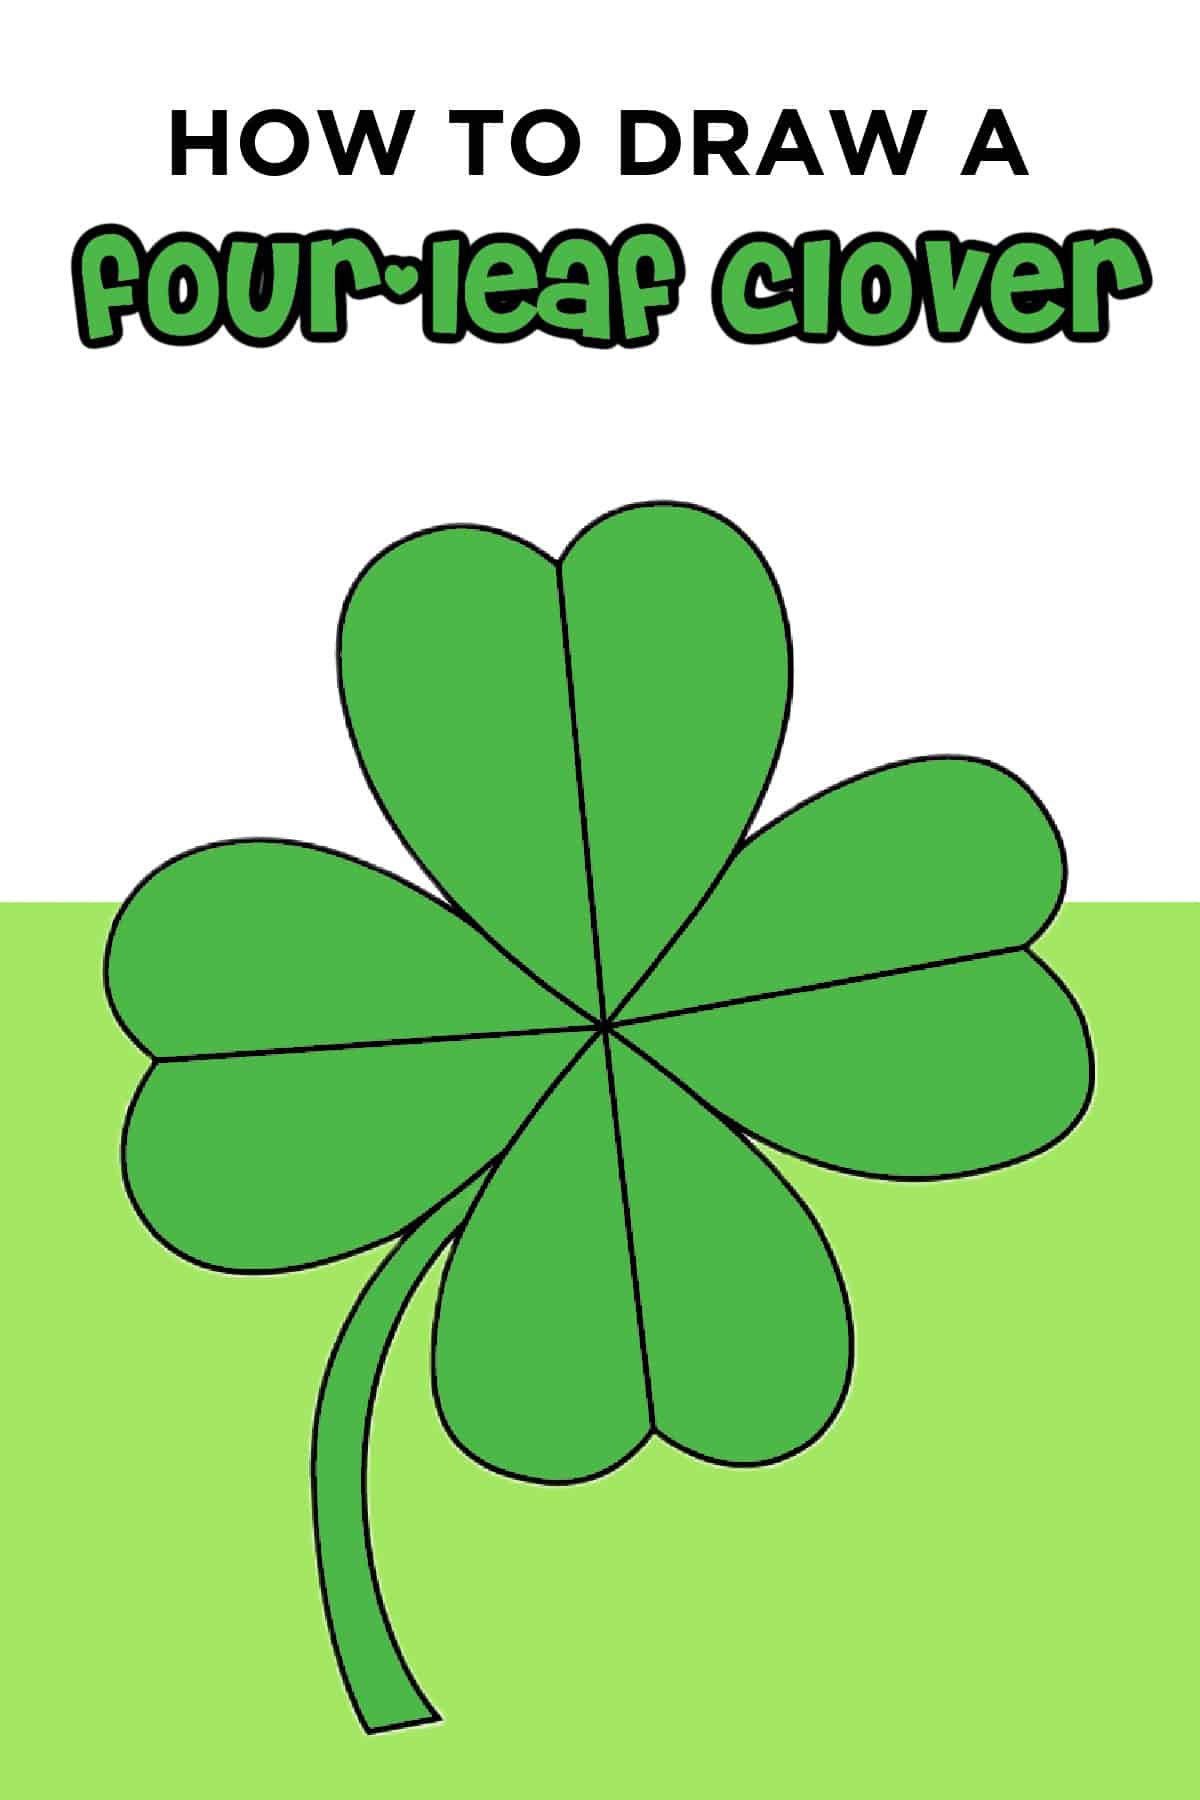 draw a four-leaf clover